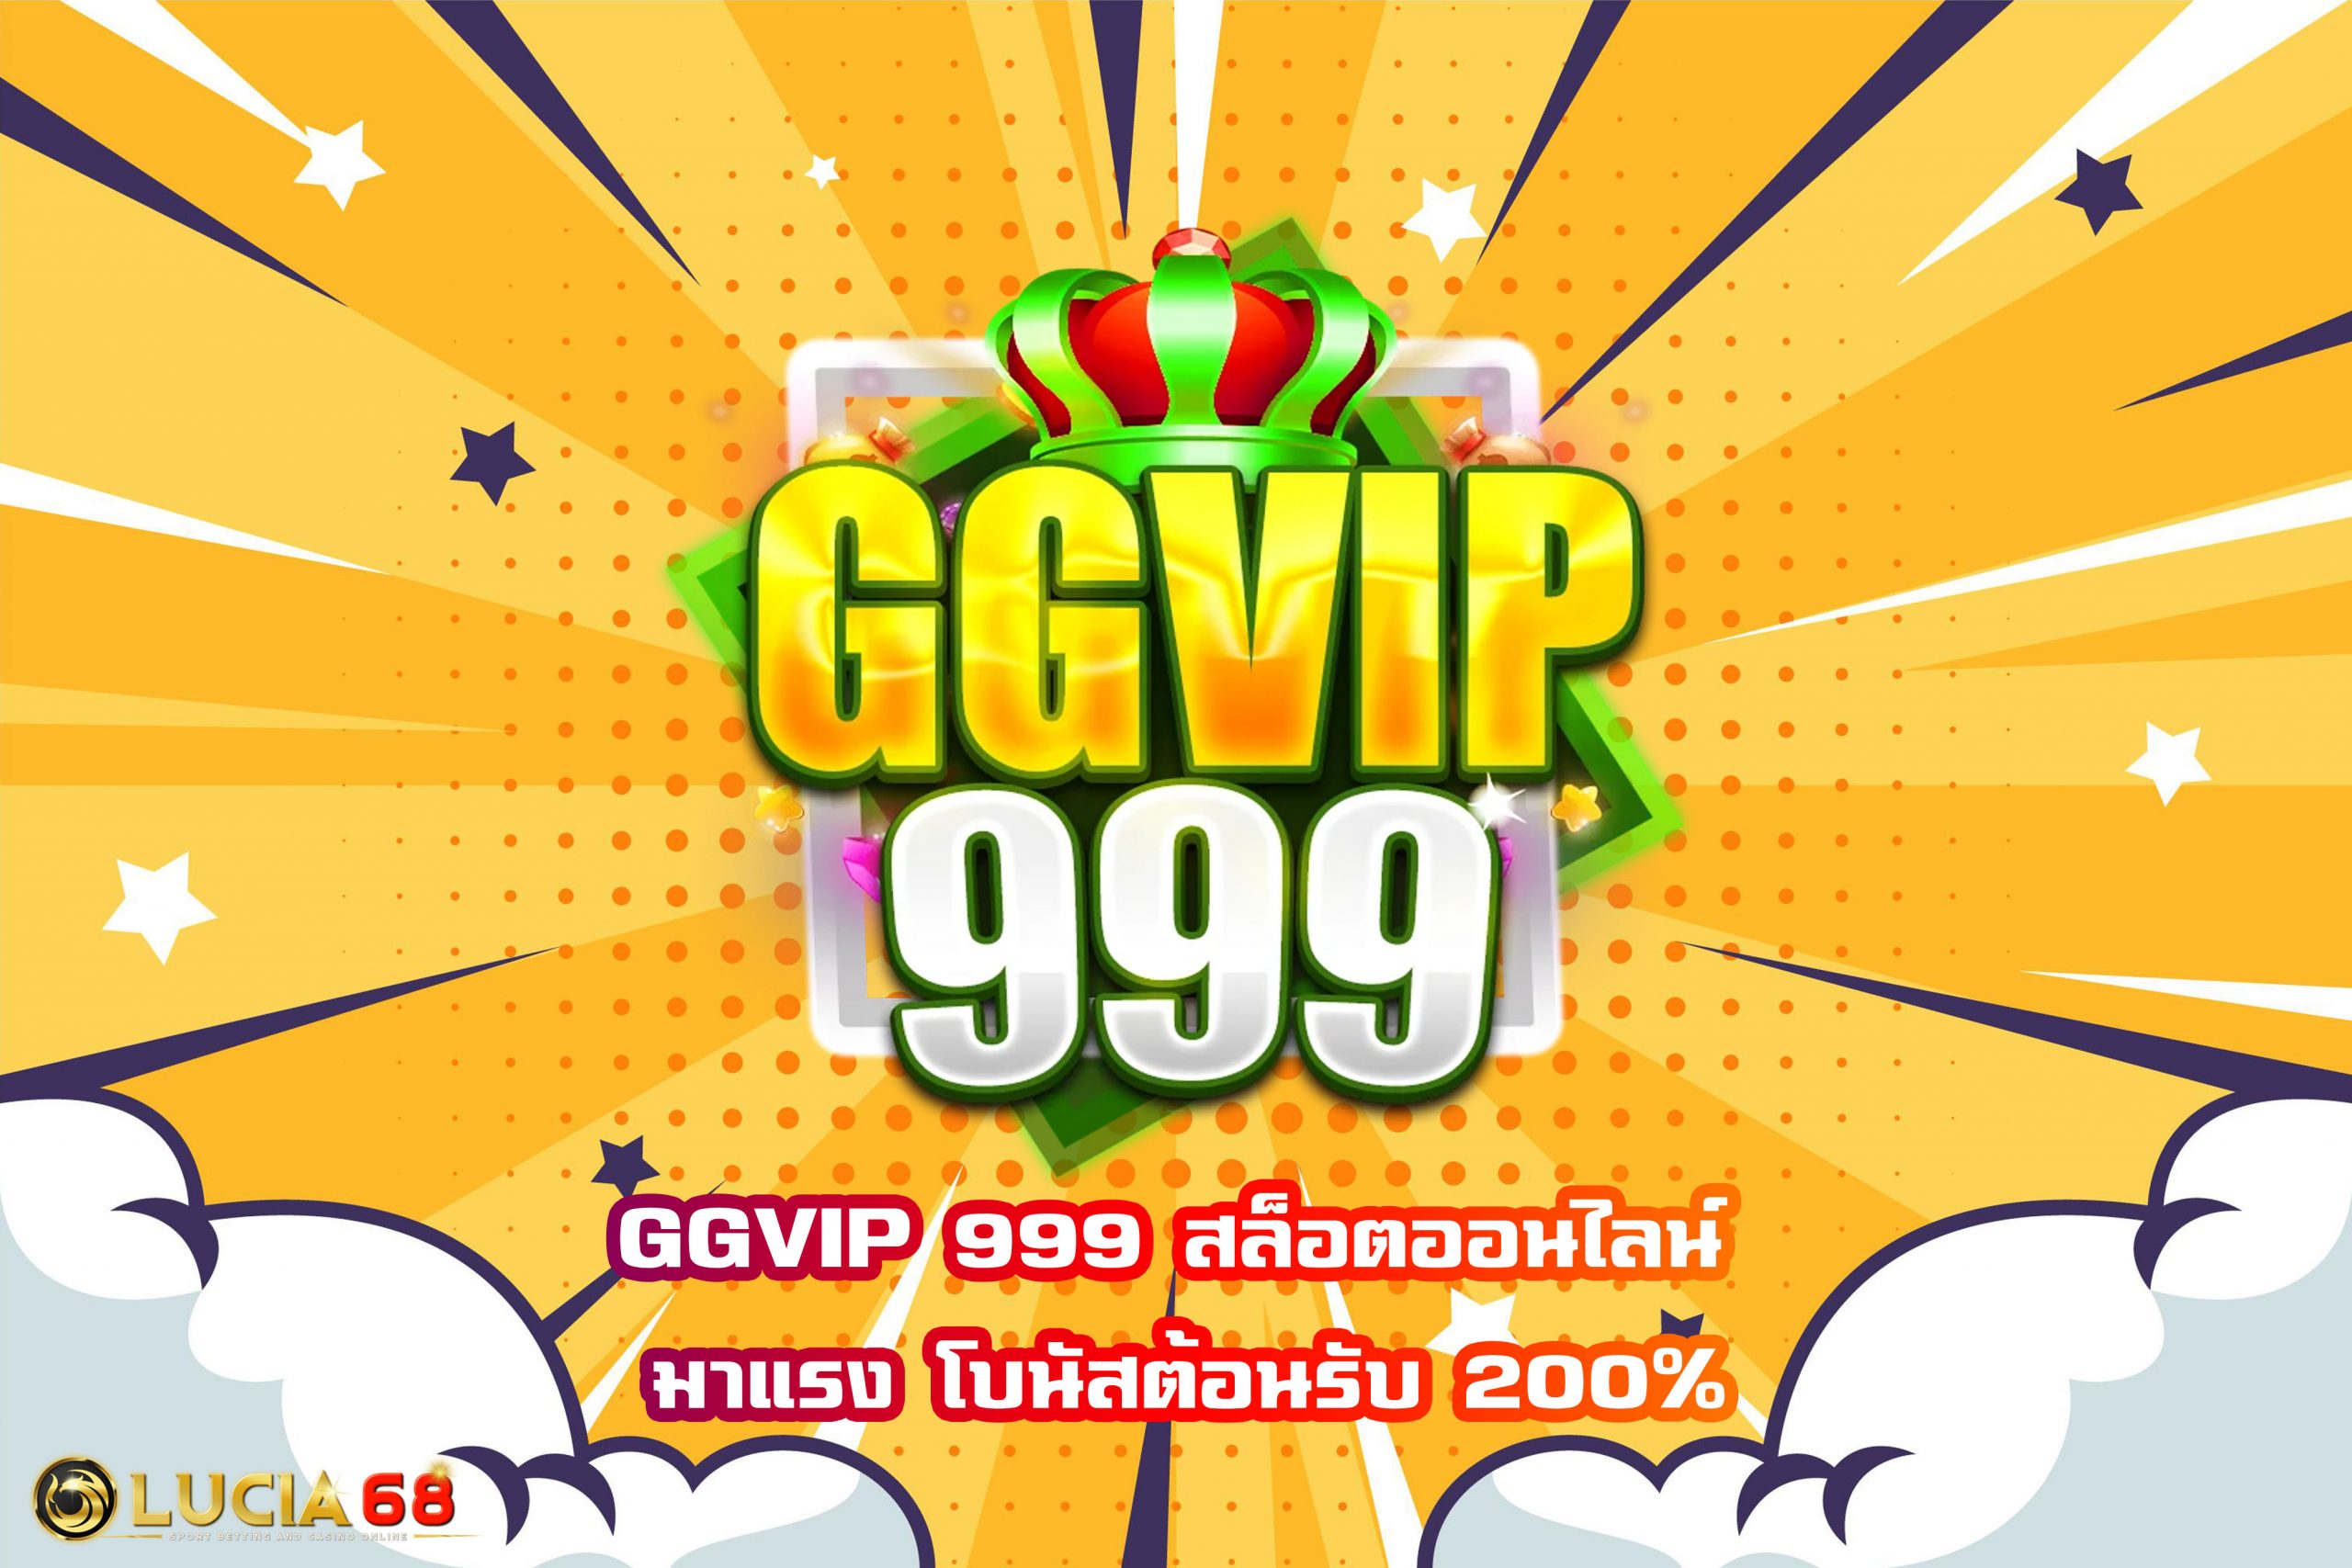 GGVIP 999 สล็อตออนไลน์ มาแรง โบนัสต้อนรับ 200%